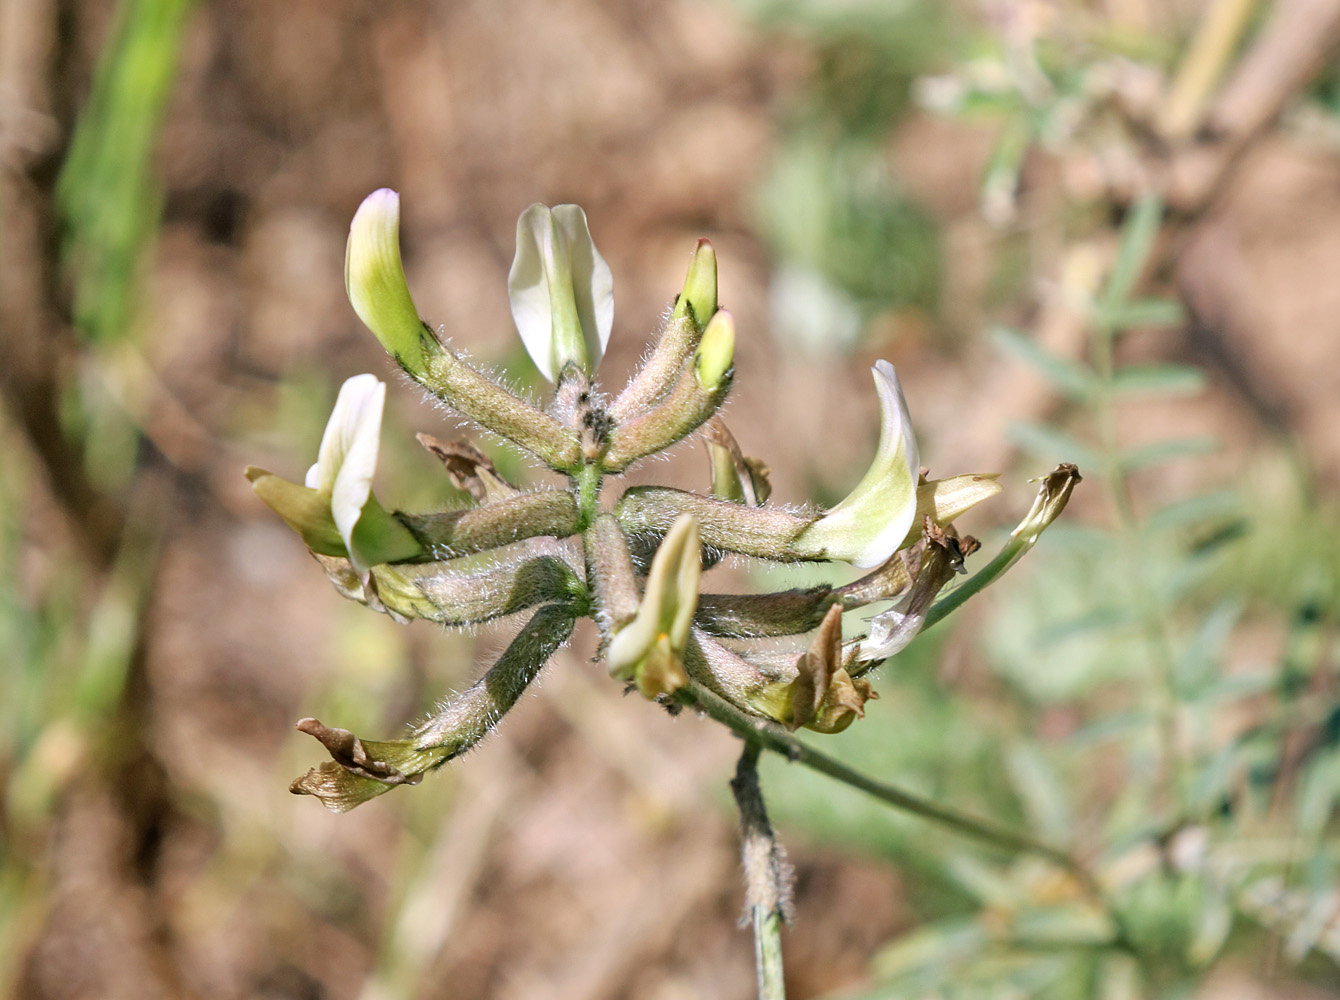 Image of Astragalus kabadianus specimen.